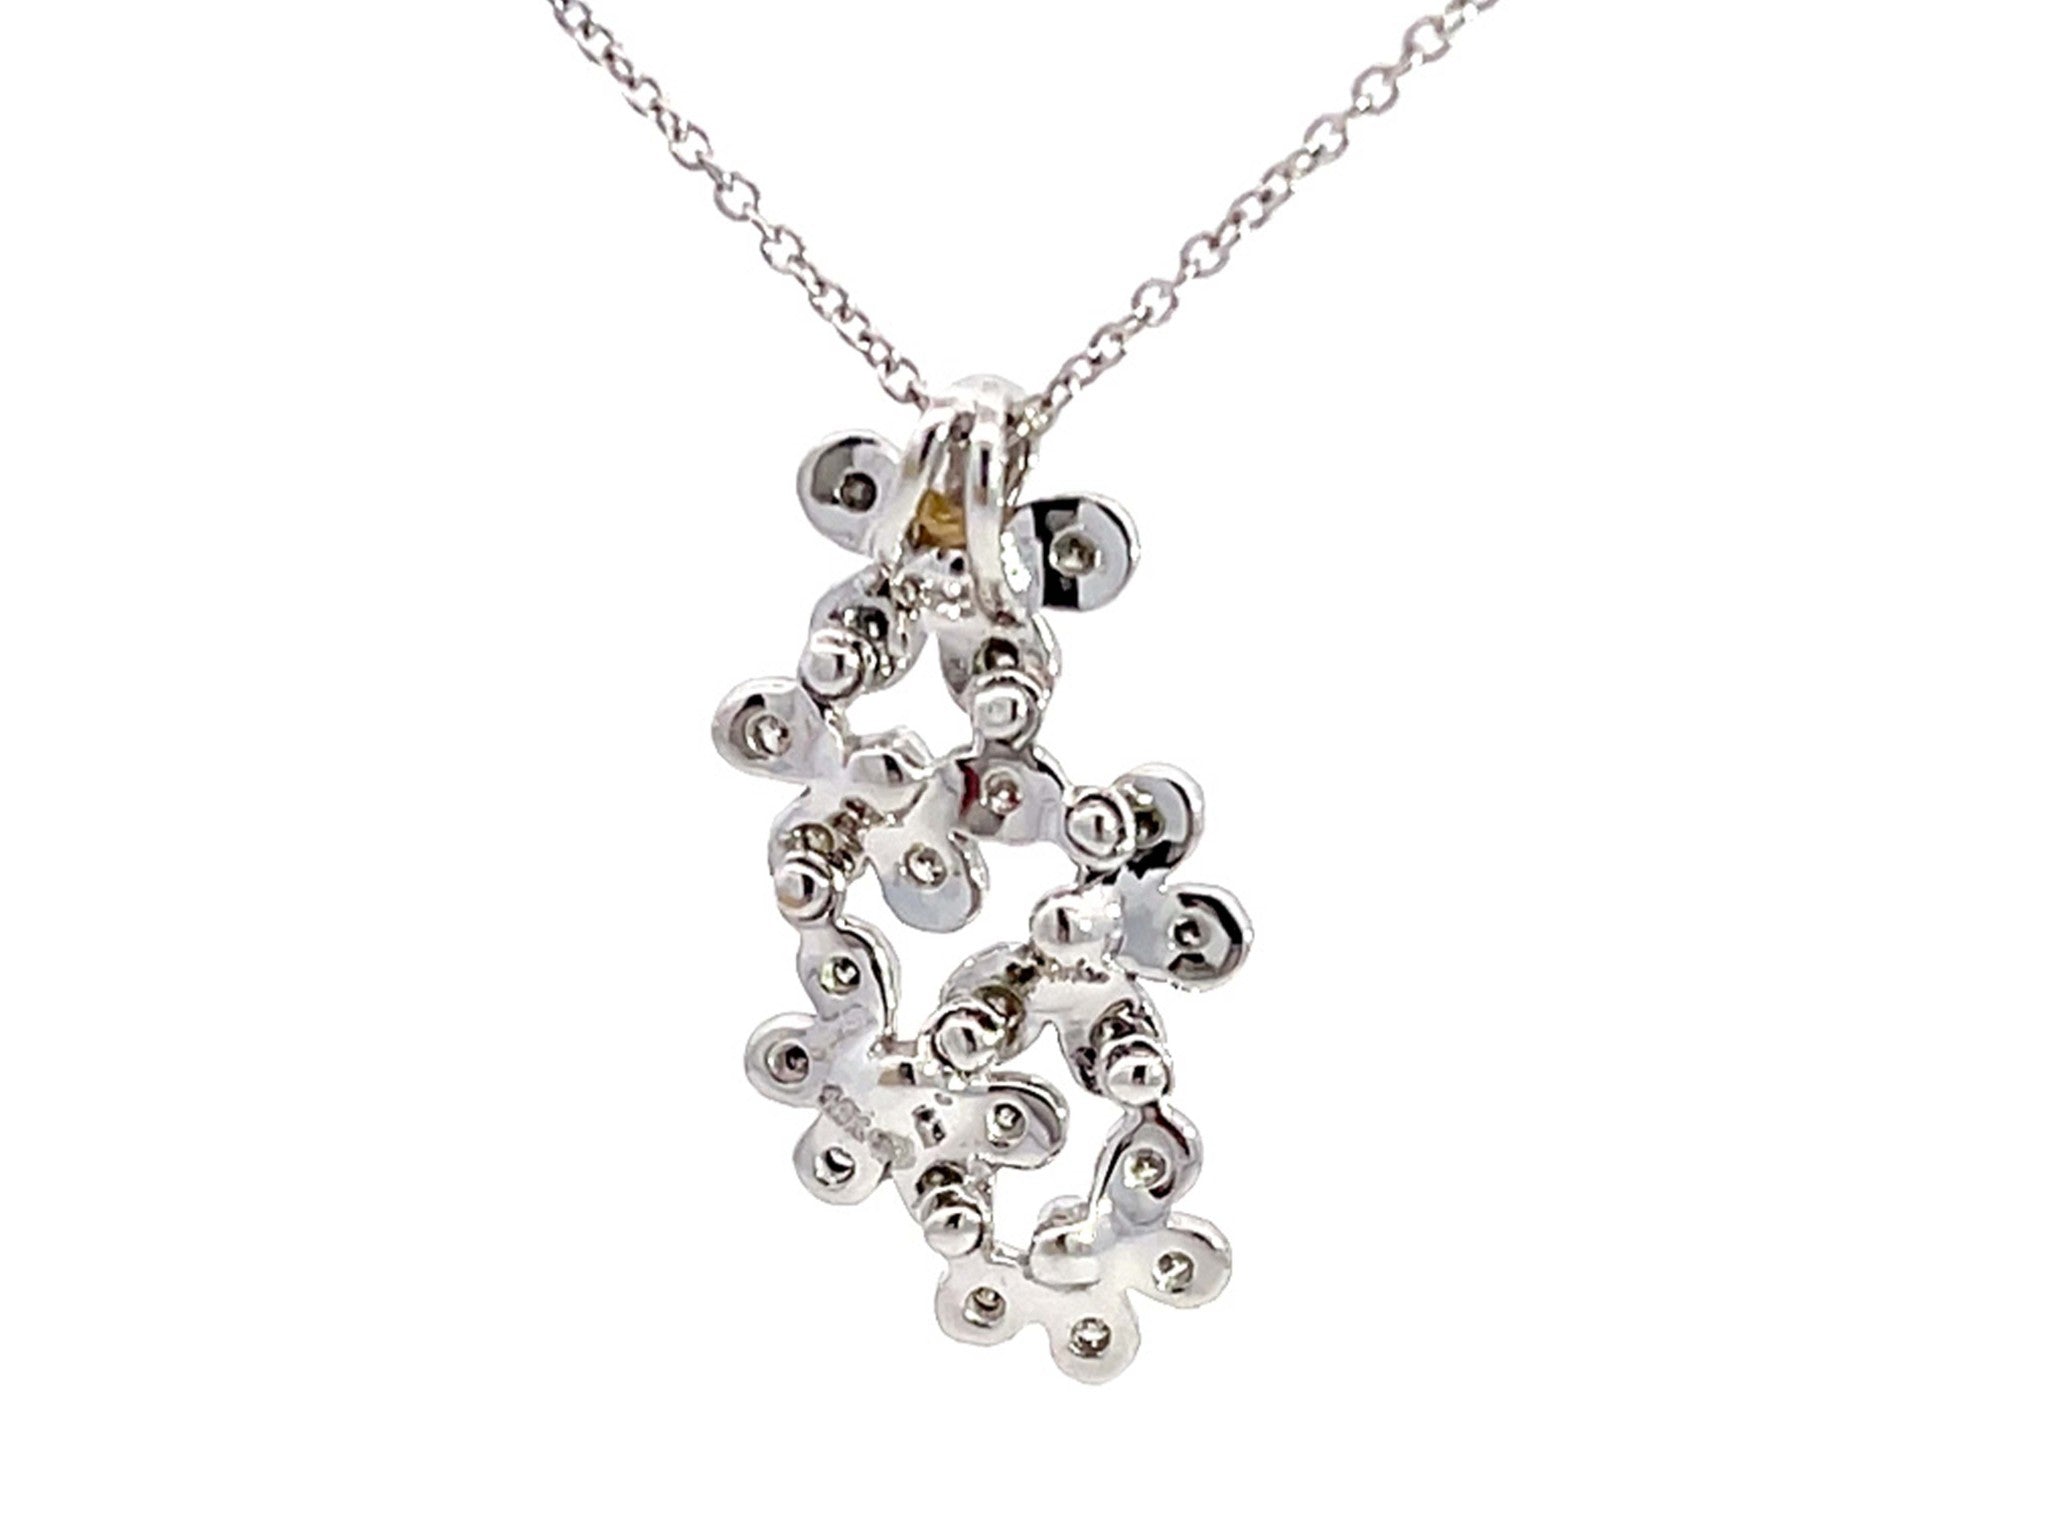 5 Diamond Flower Pendant Necklace in 14k White Gold